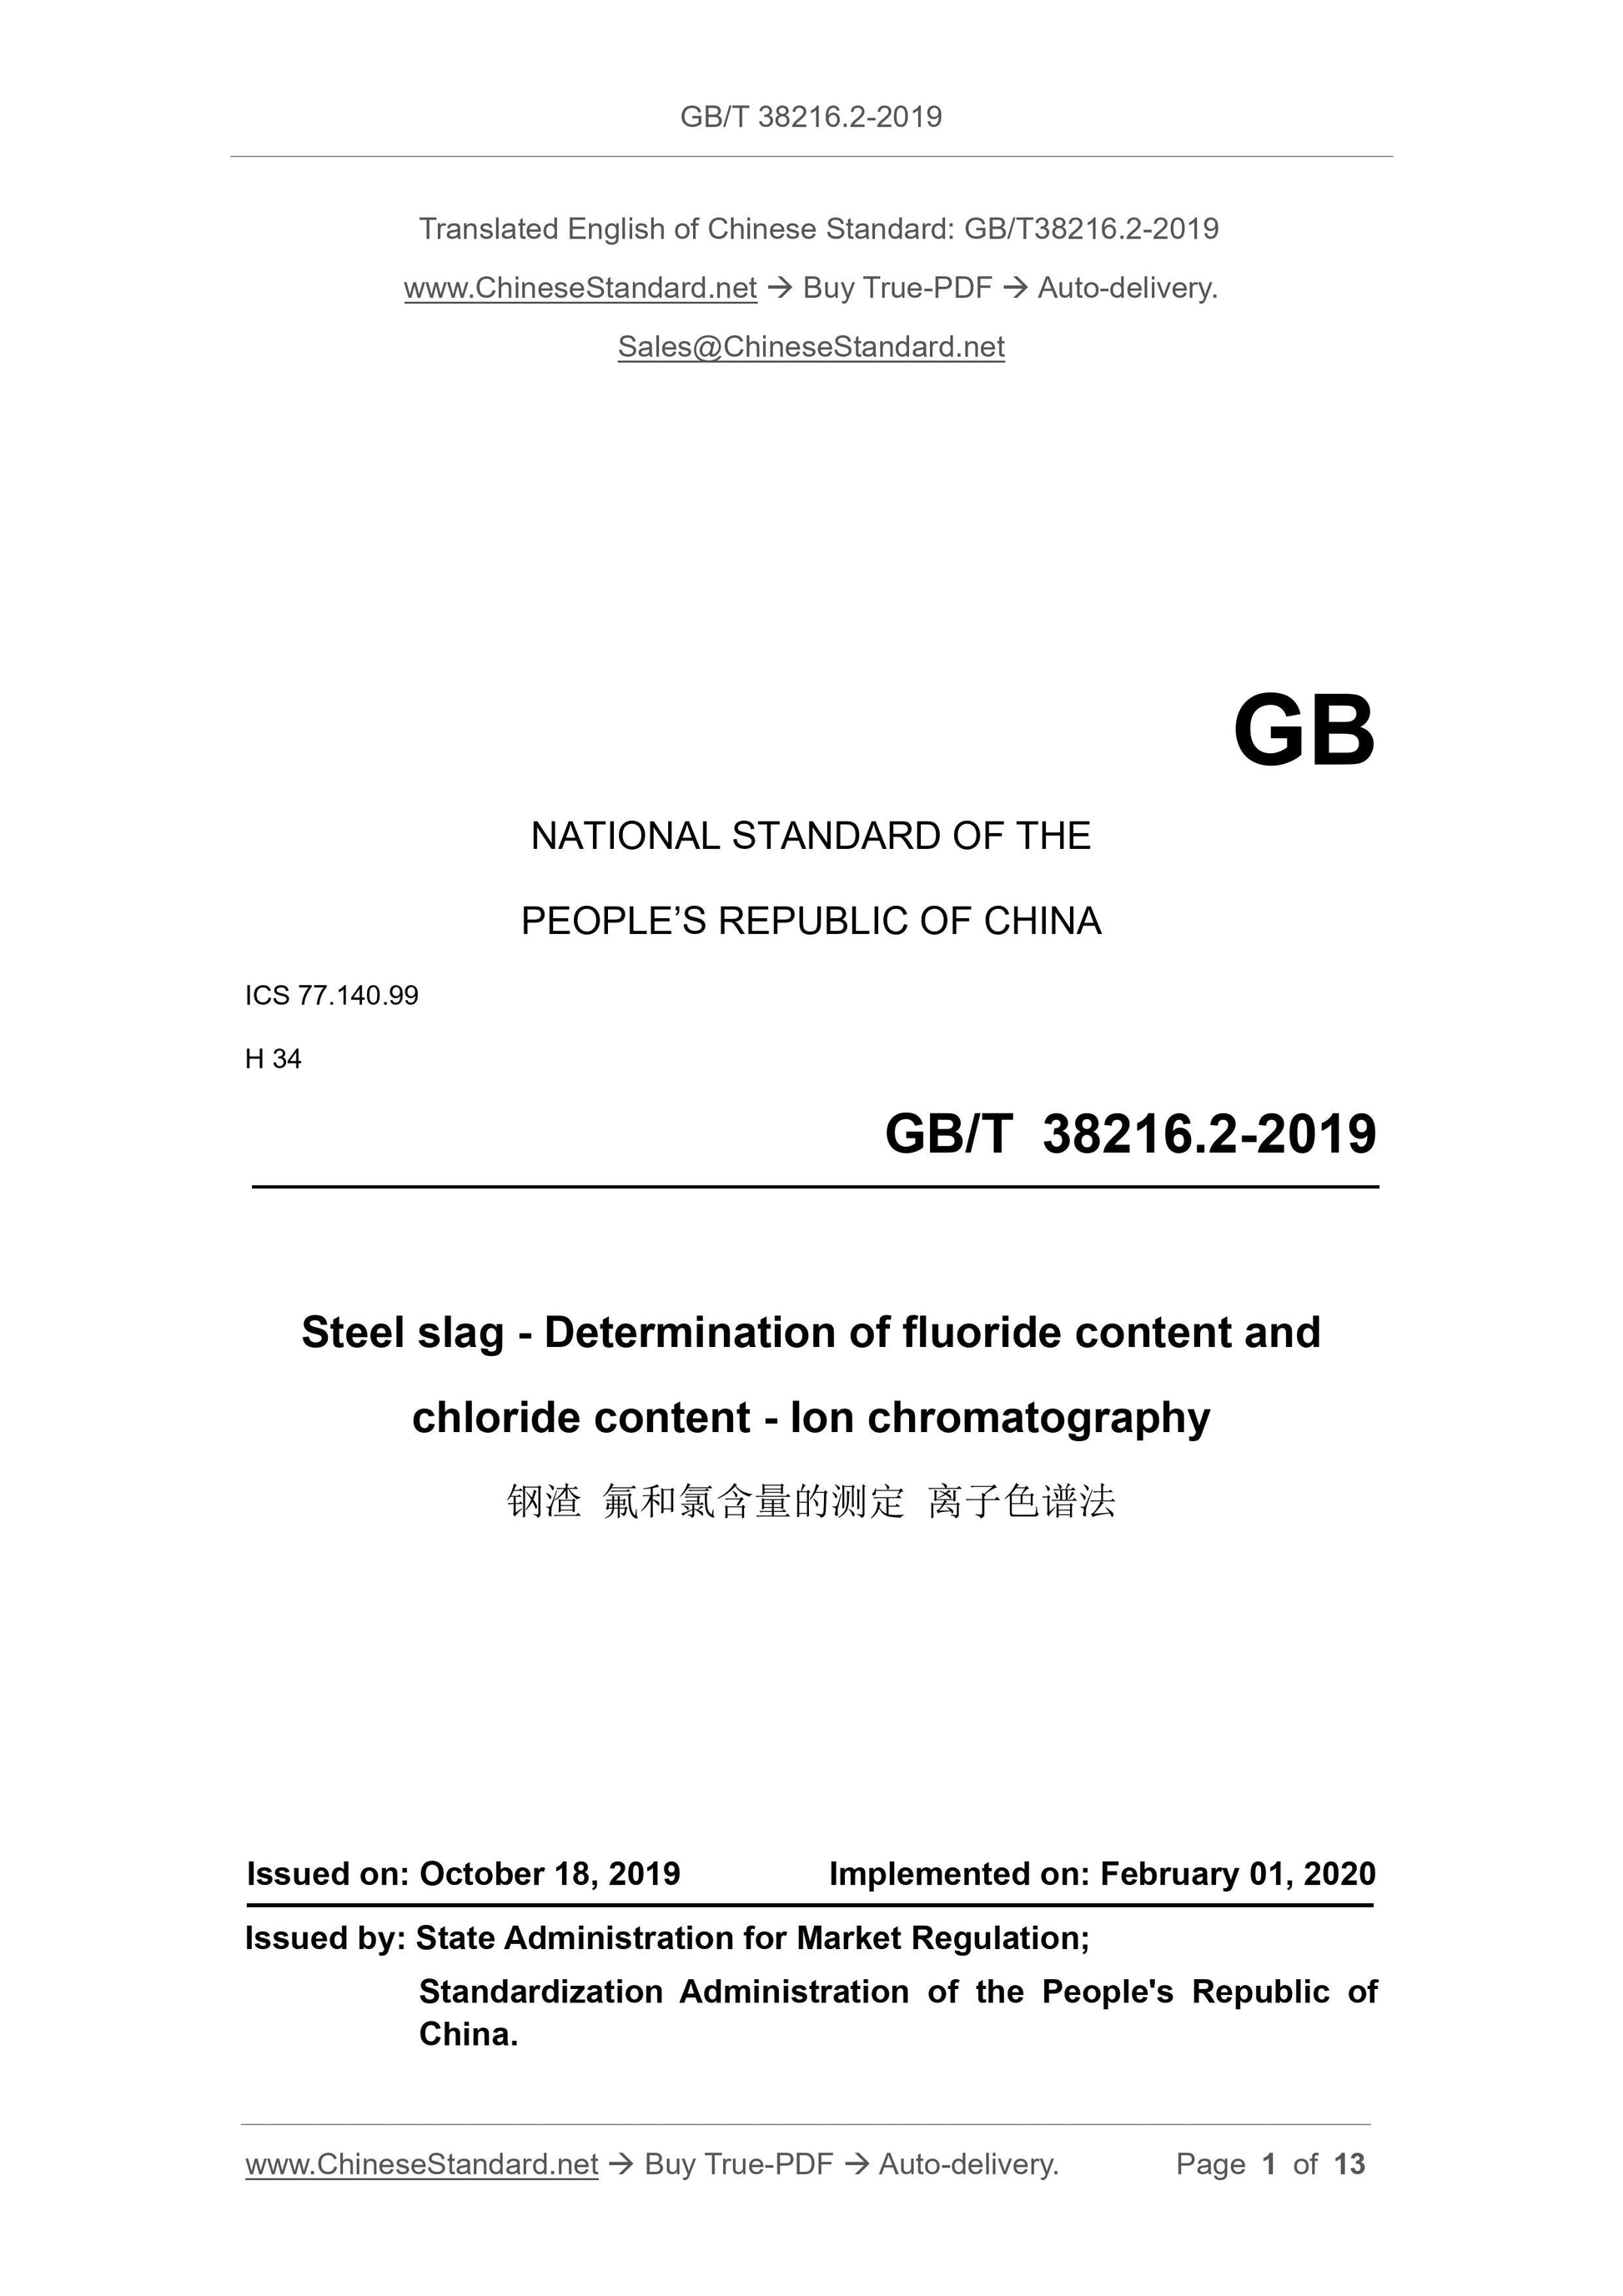 GBT38216.2-2019 Page 1